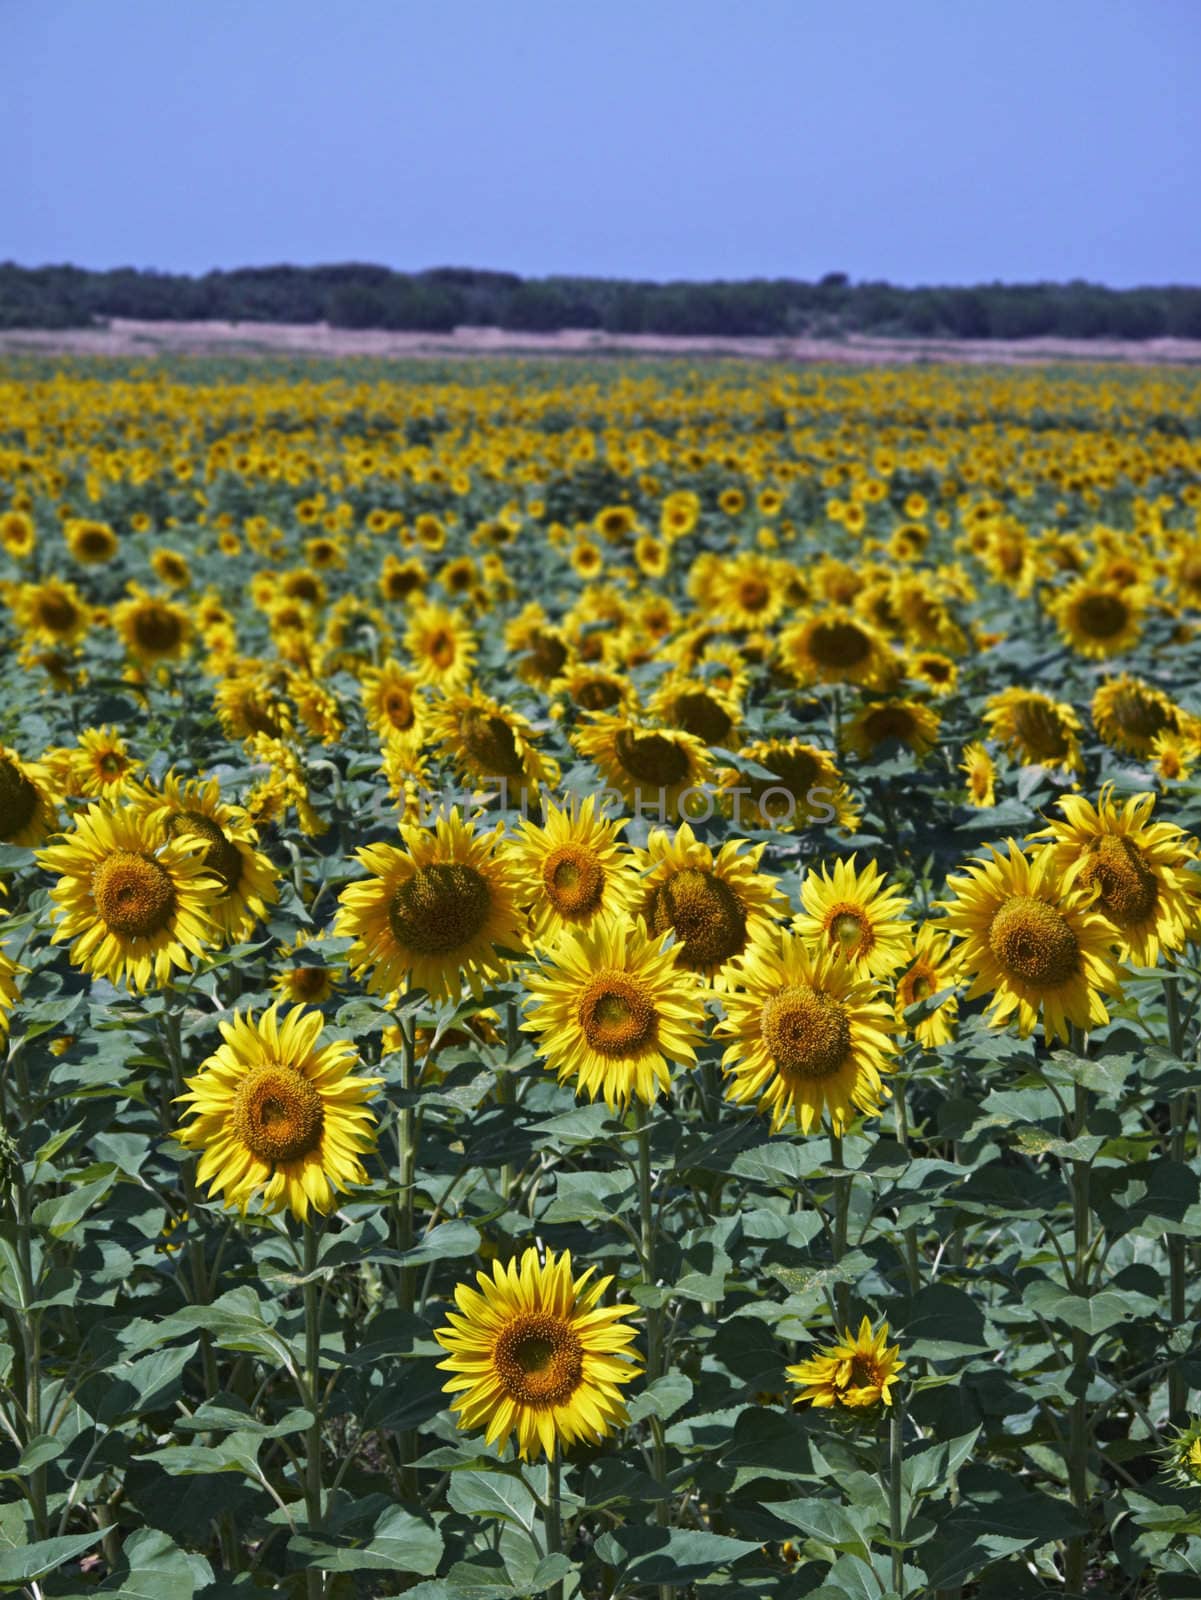 ITALY, Tuscany, Chiarone, countryside, sunflowers field